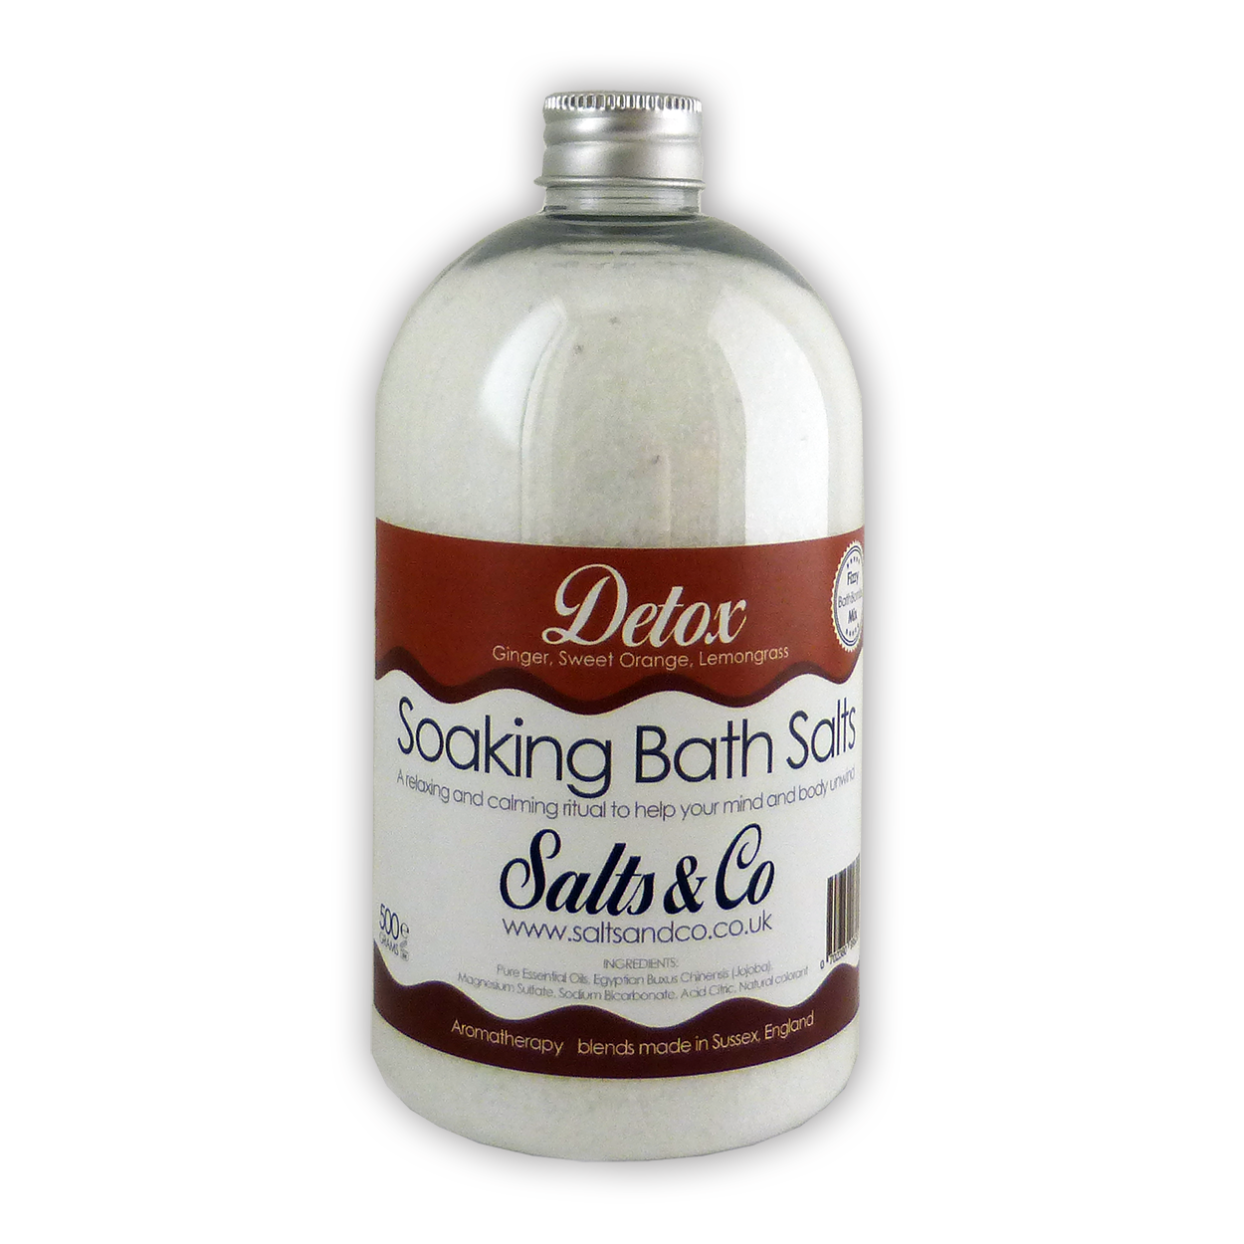 Detox Bath Salts by Salts & Co - Ginger, Lemongrass, Orange essential oils